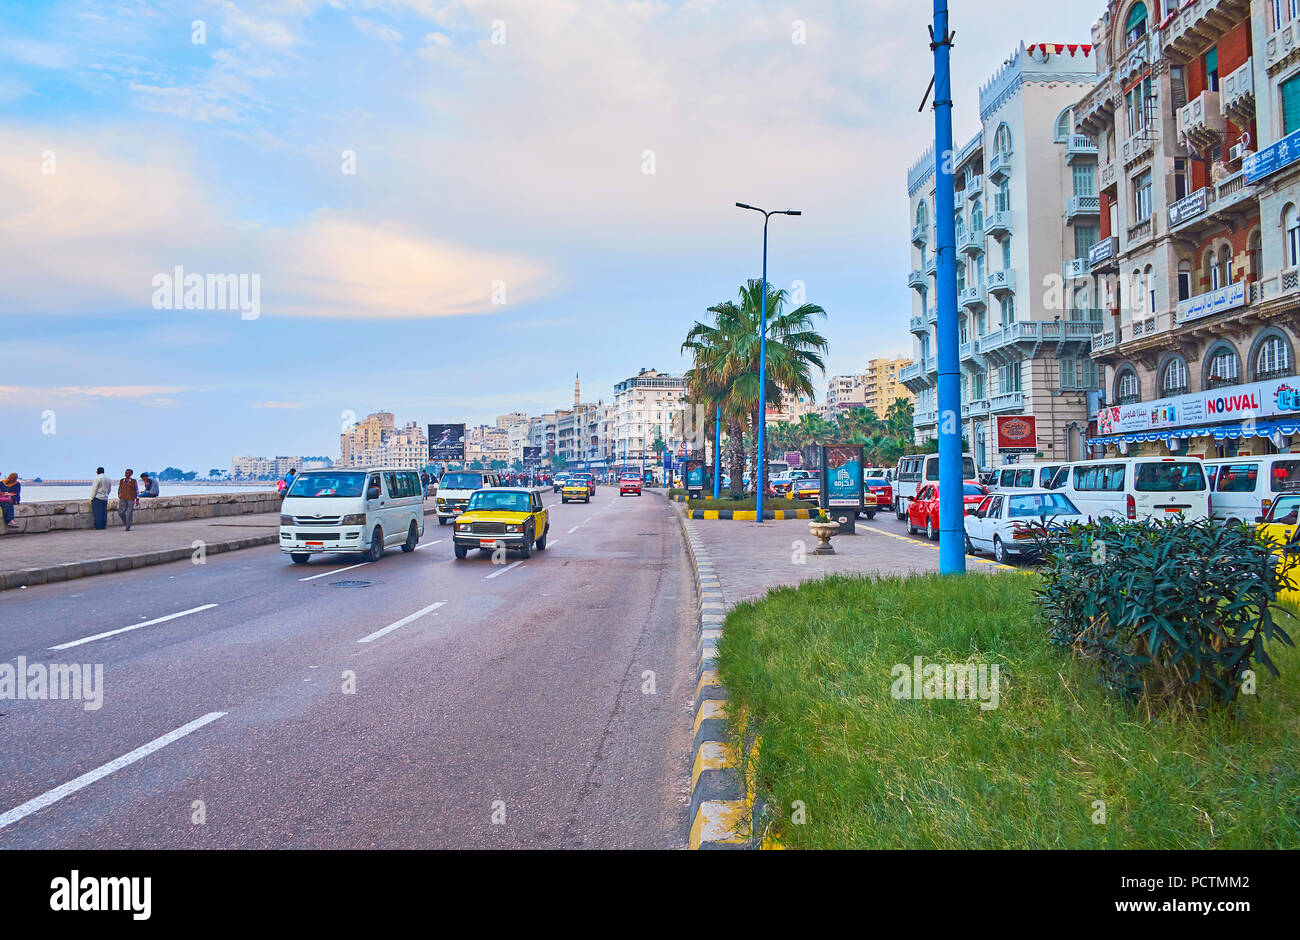 ALEXANDRIA, EGYPT - DECEMBER 18, 2017: The walk along the coast of Mediterranean sea in central city district, Corniche seaside promenade is busy plac Stock Photo